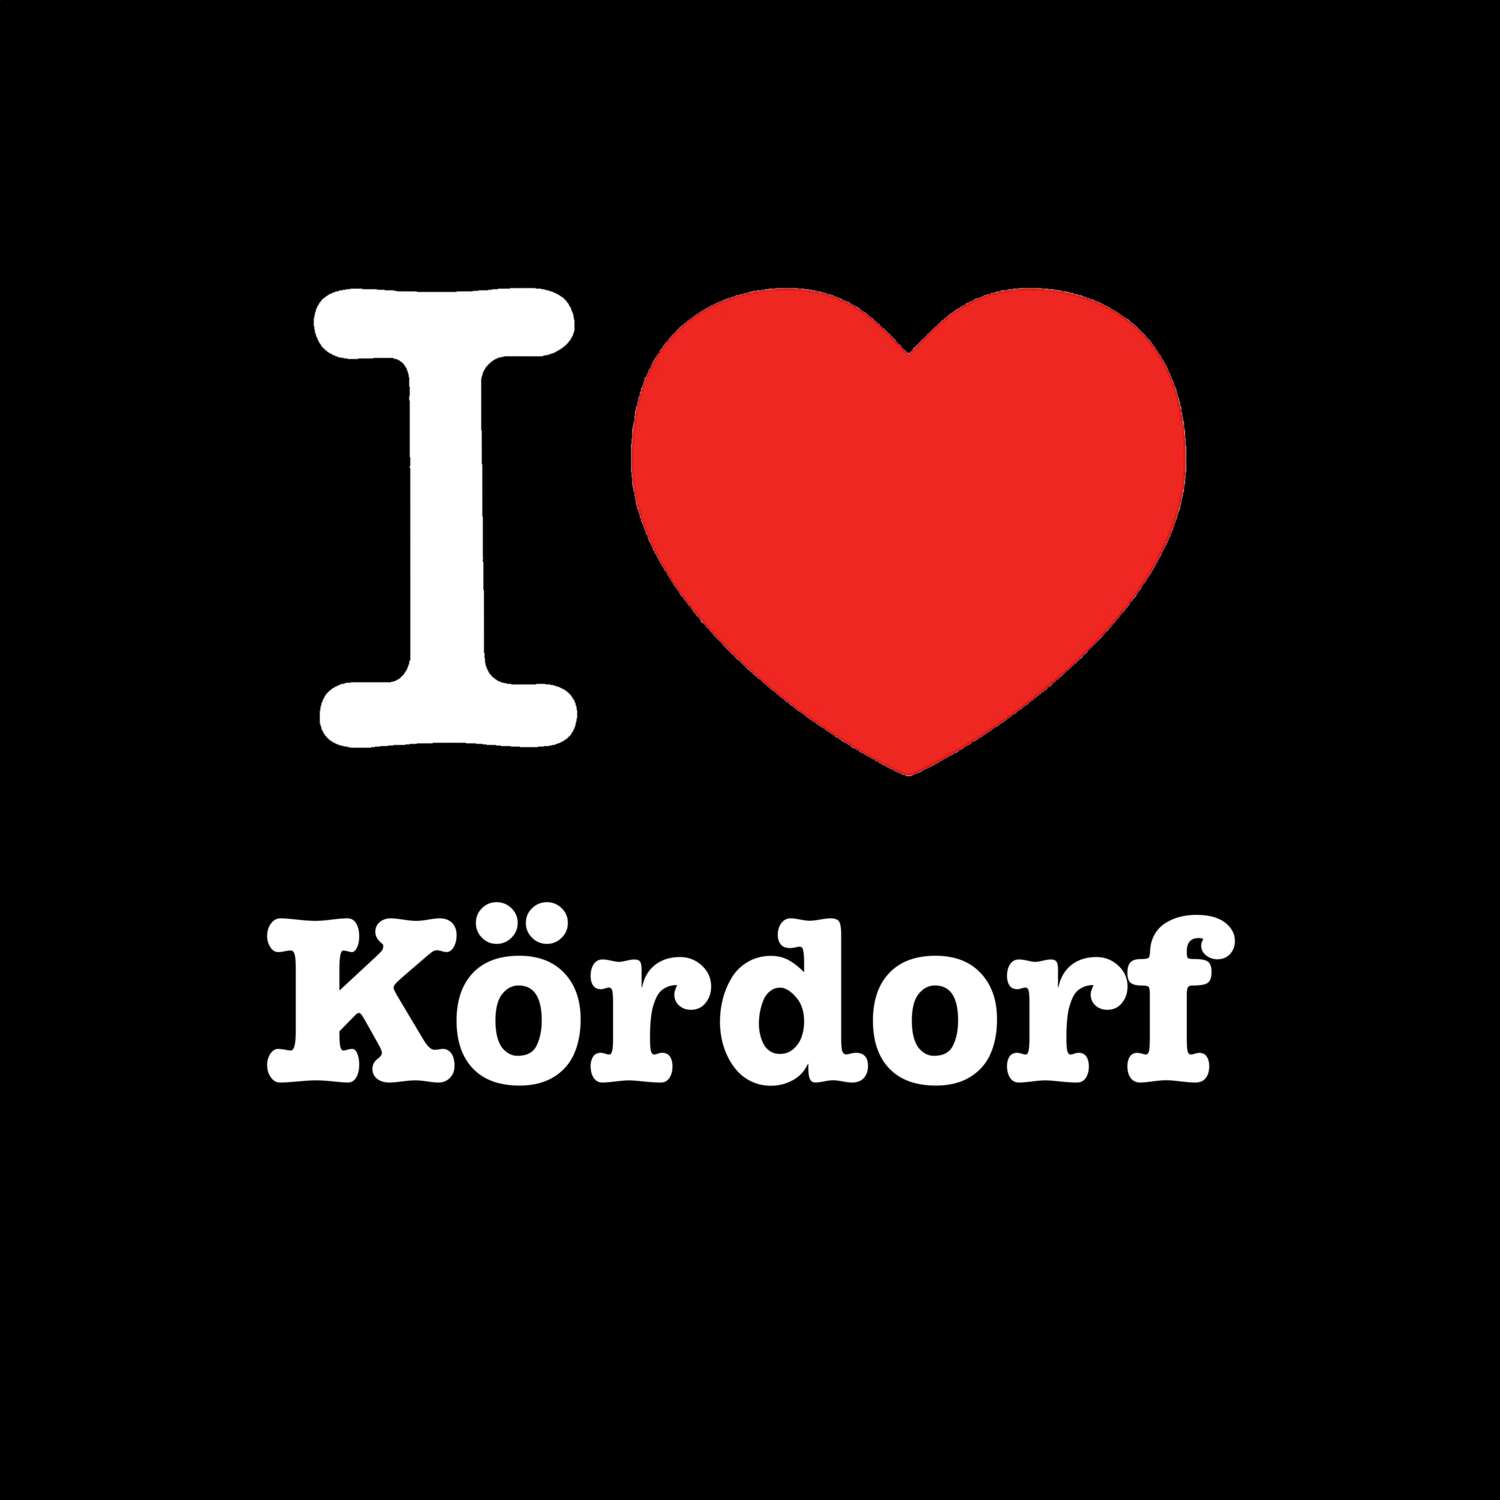 Kördorf T-Shirt »I love«